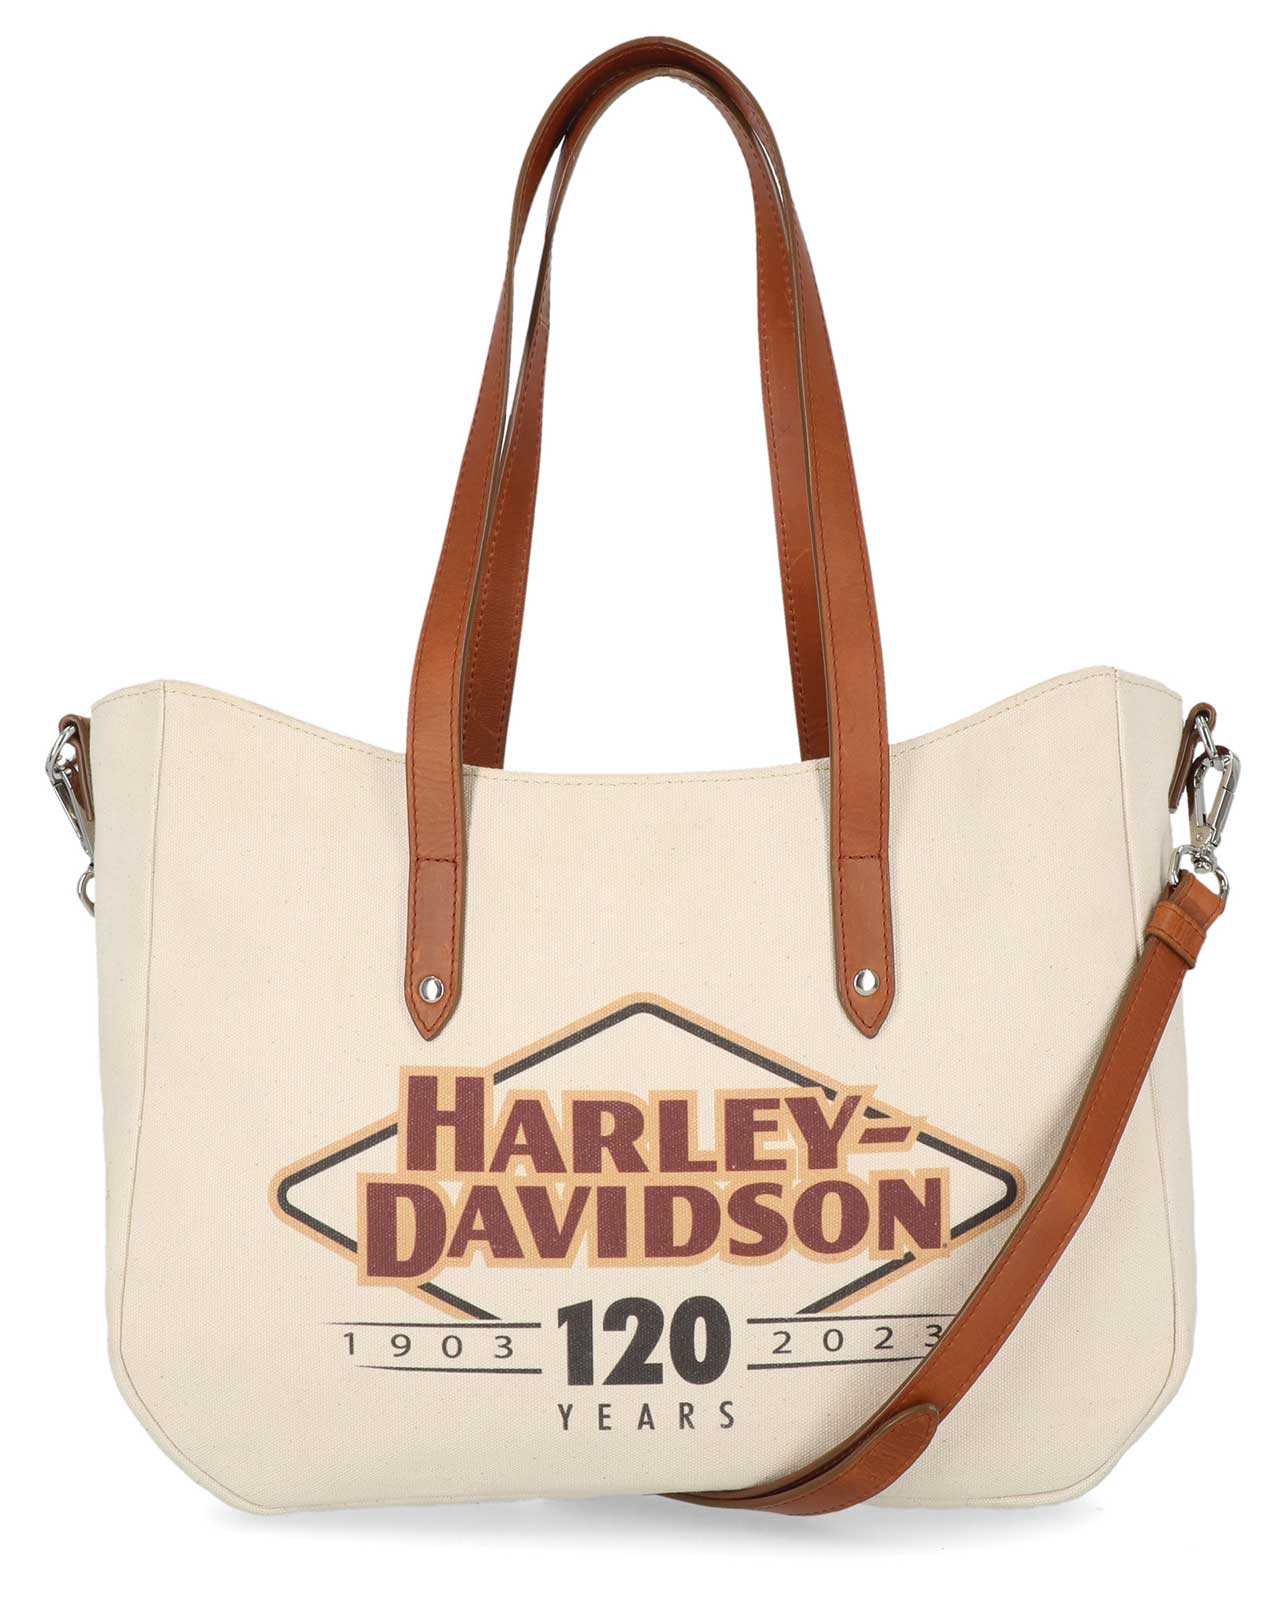 Harley Davidson Genuine Leather Satchel Small Clip on Bag 